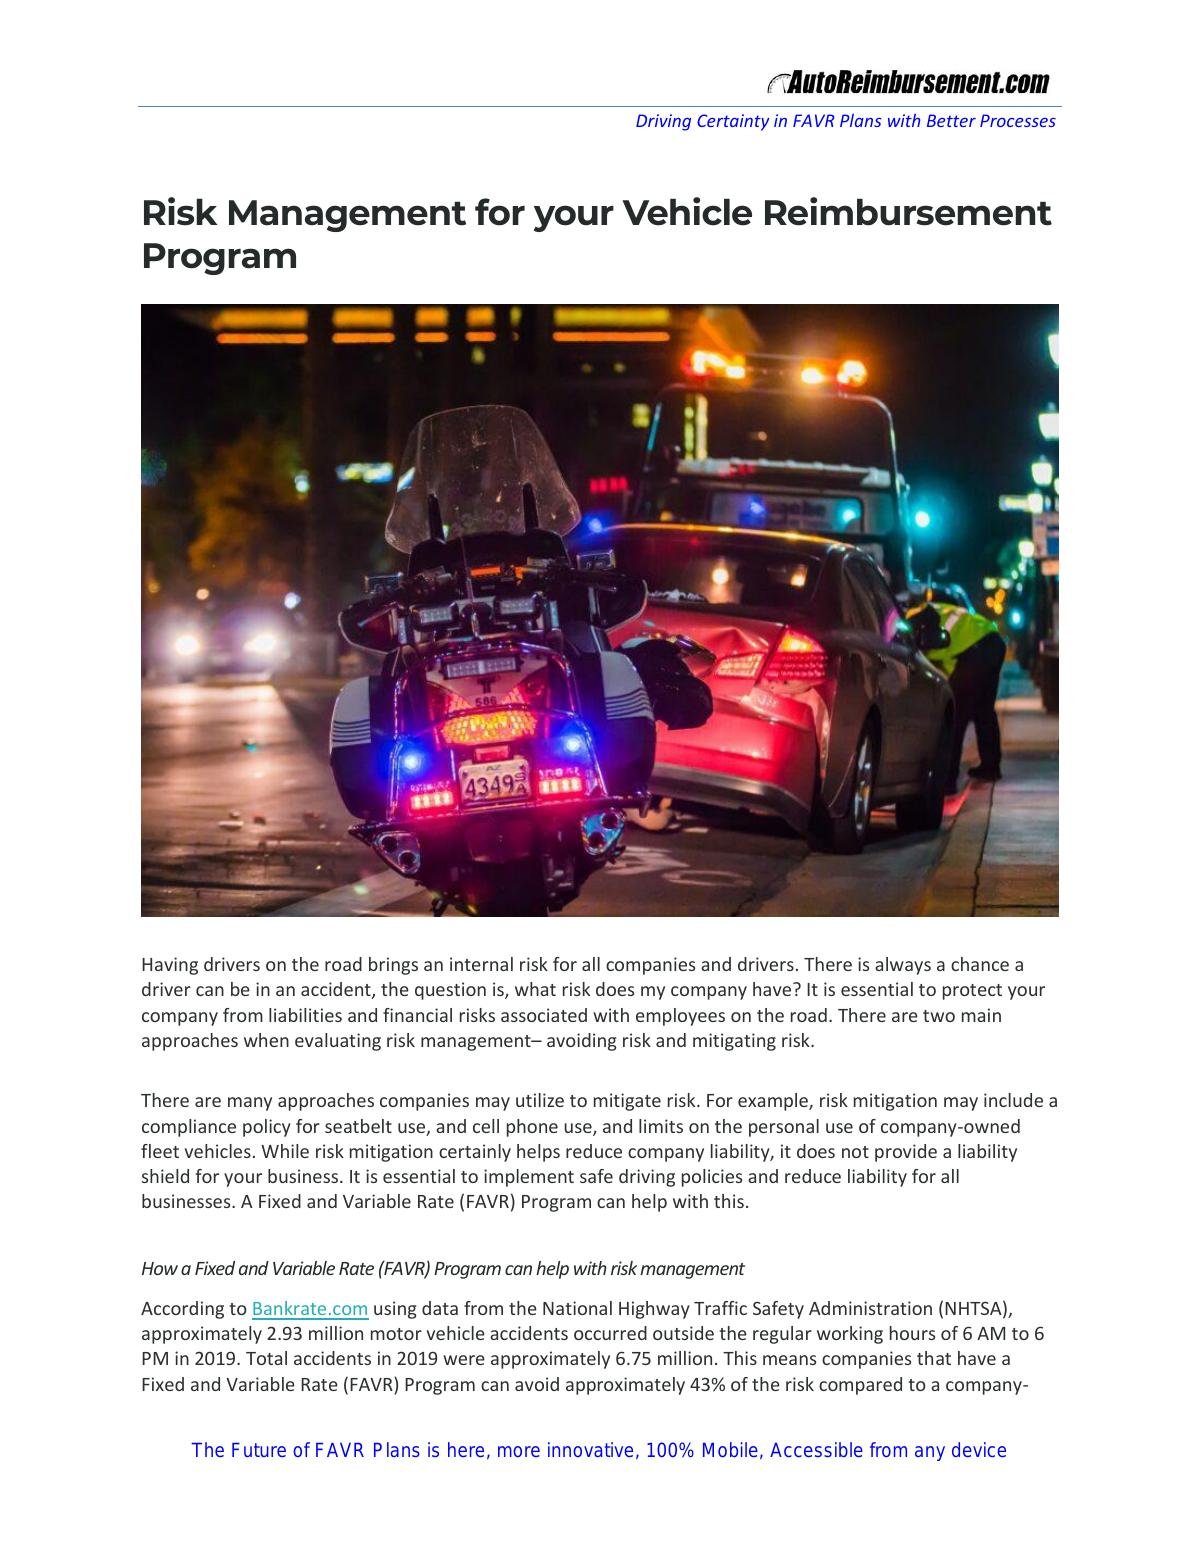 Risk management for your vehicle reimbursement program